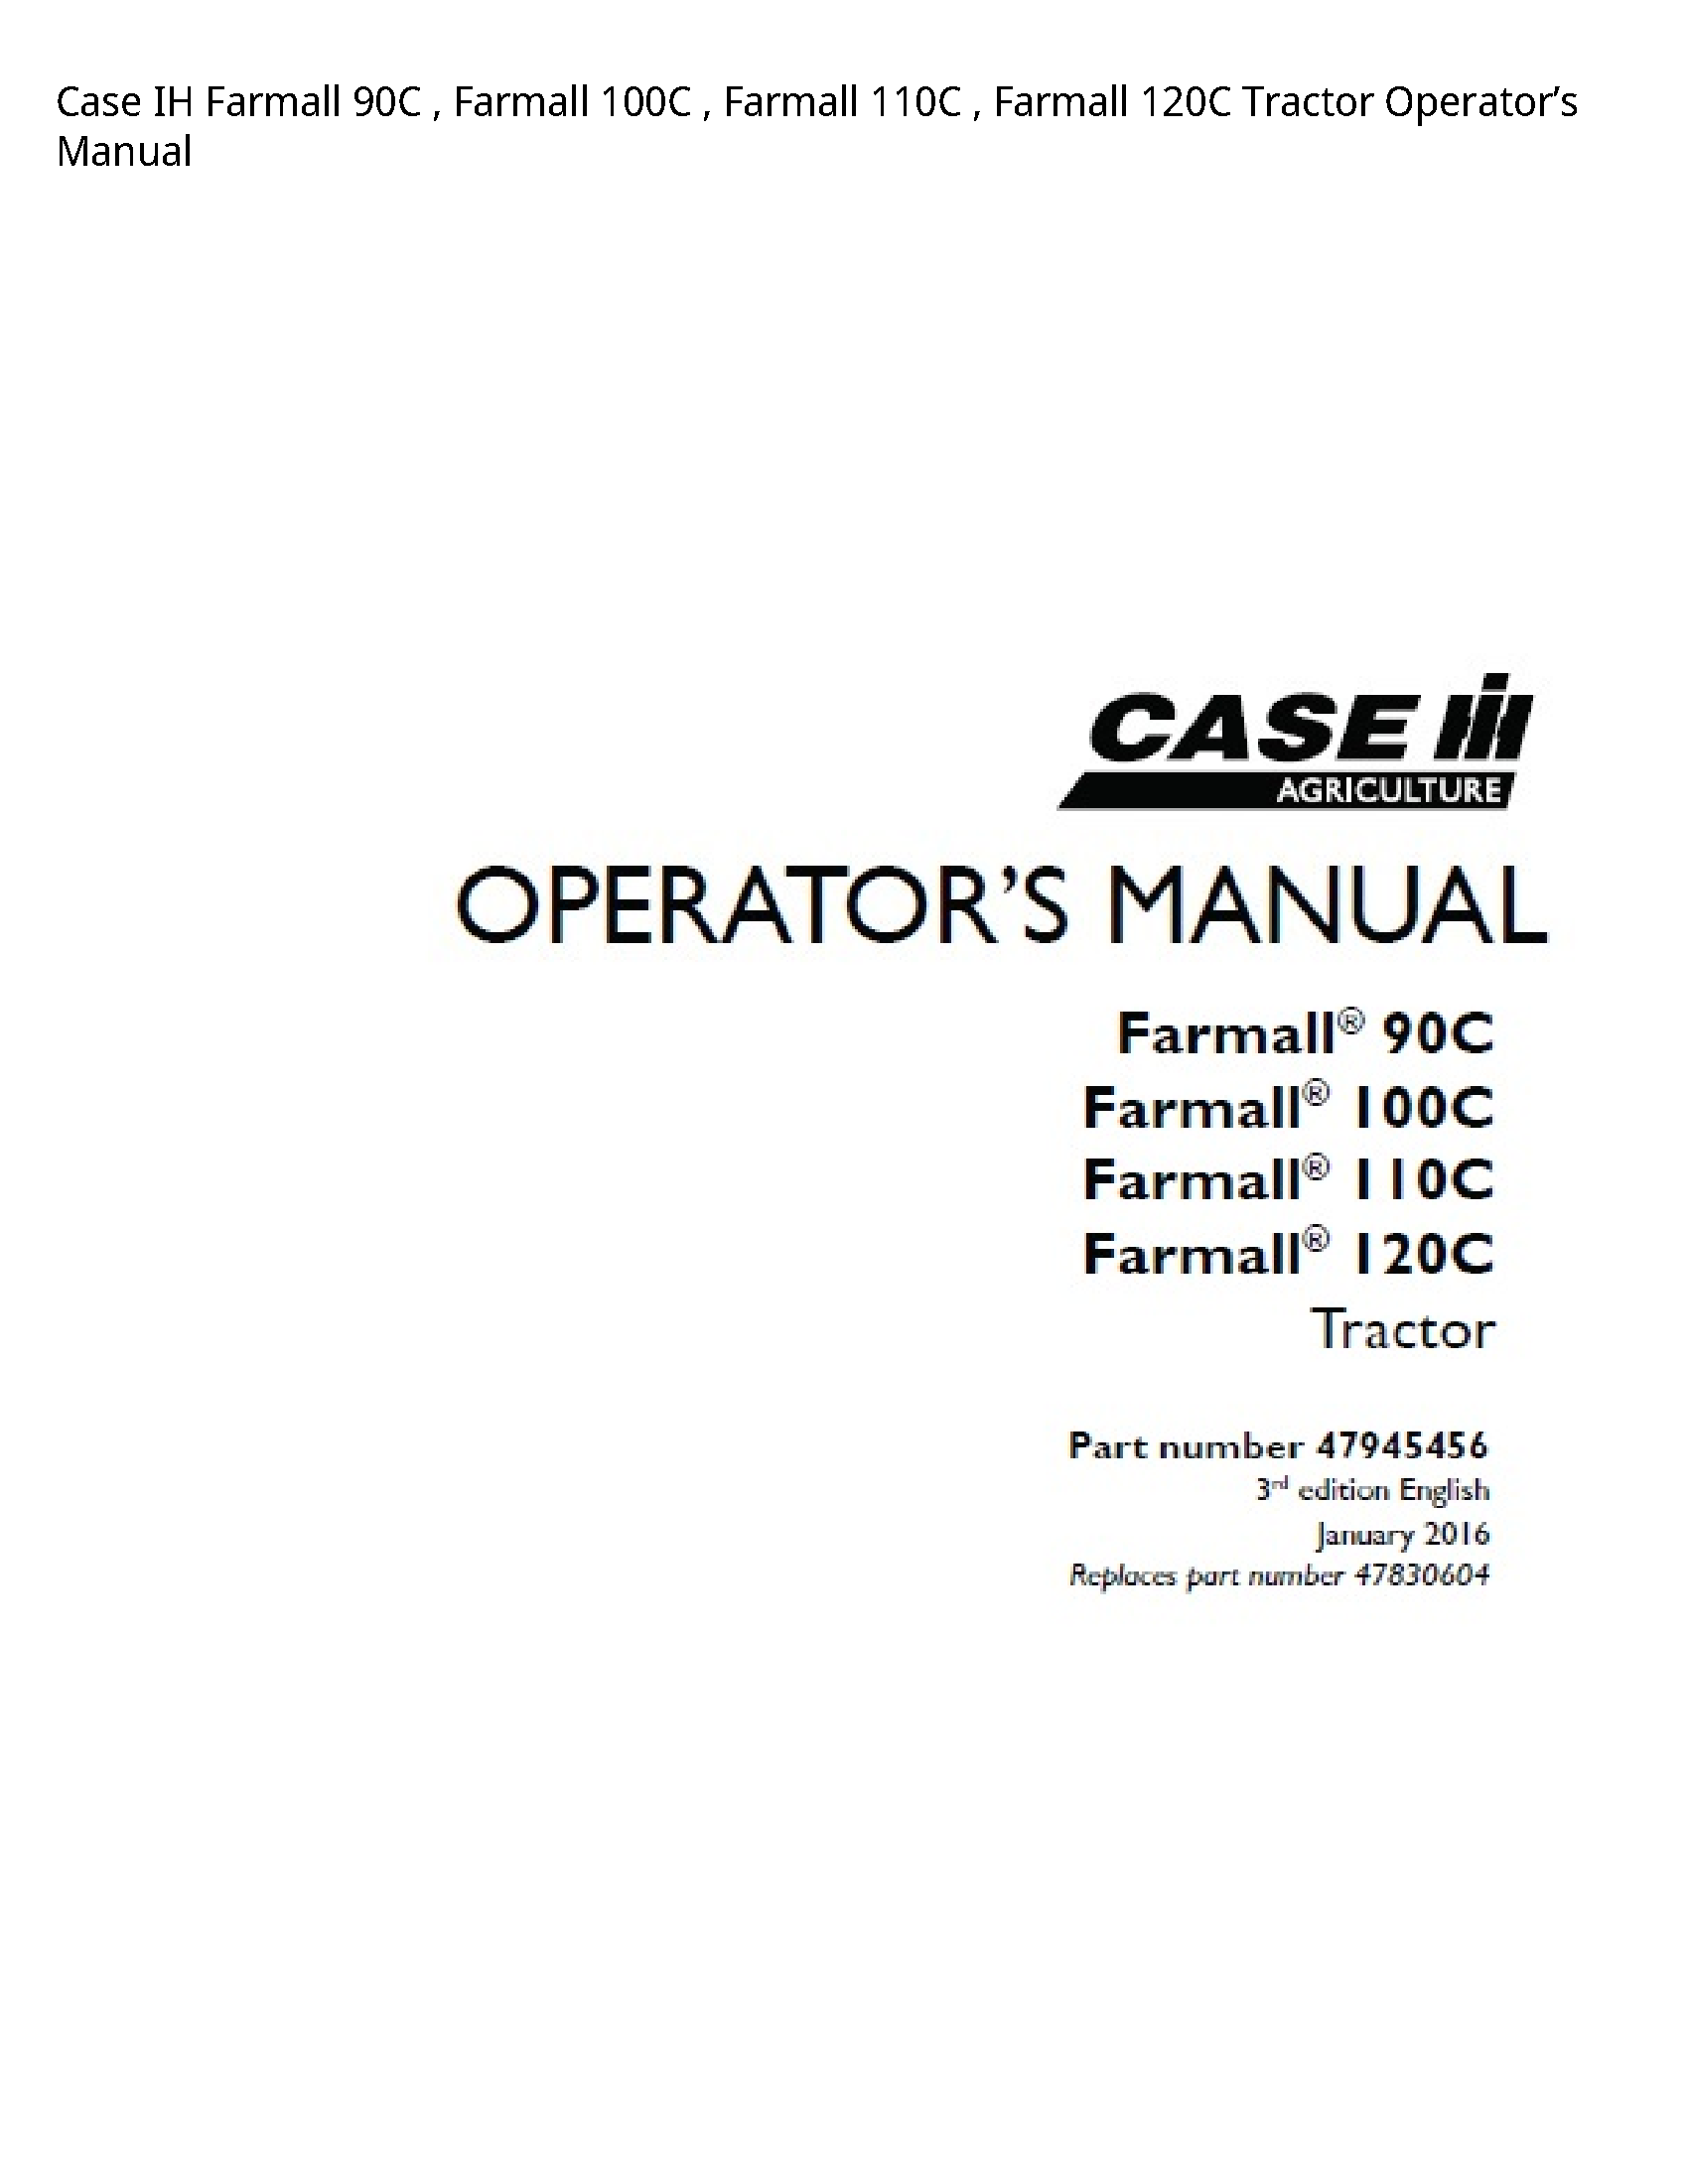 Case/Case IH 90C IH Farmall Farmall Farmall Farmall Tractor Operator’s manual